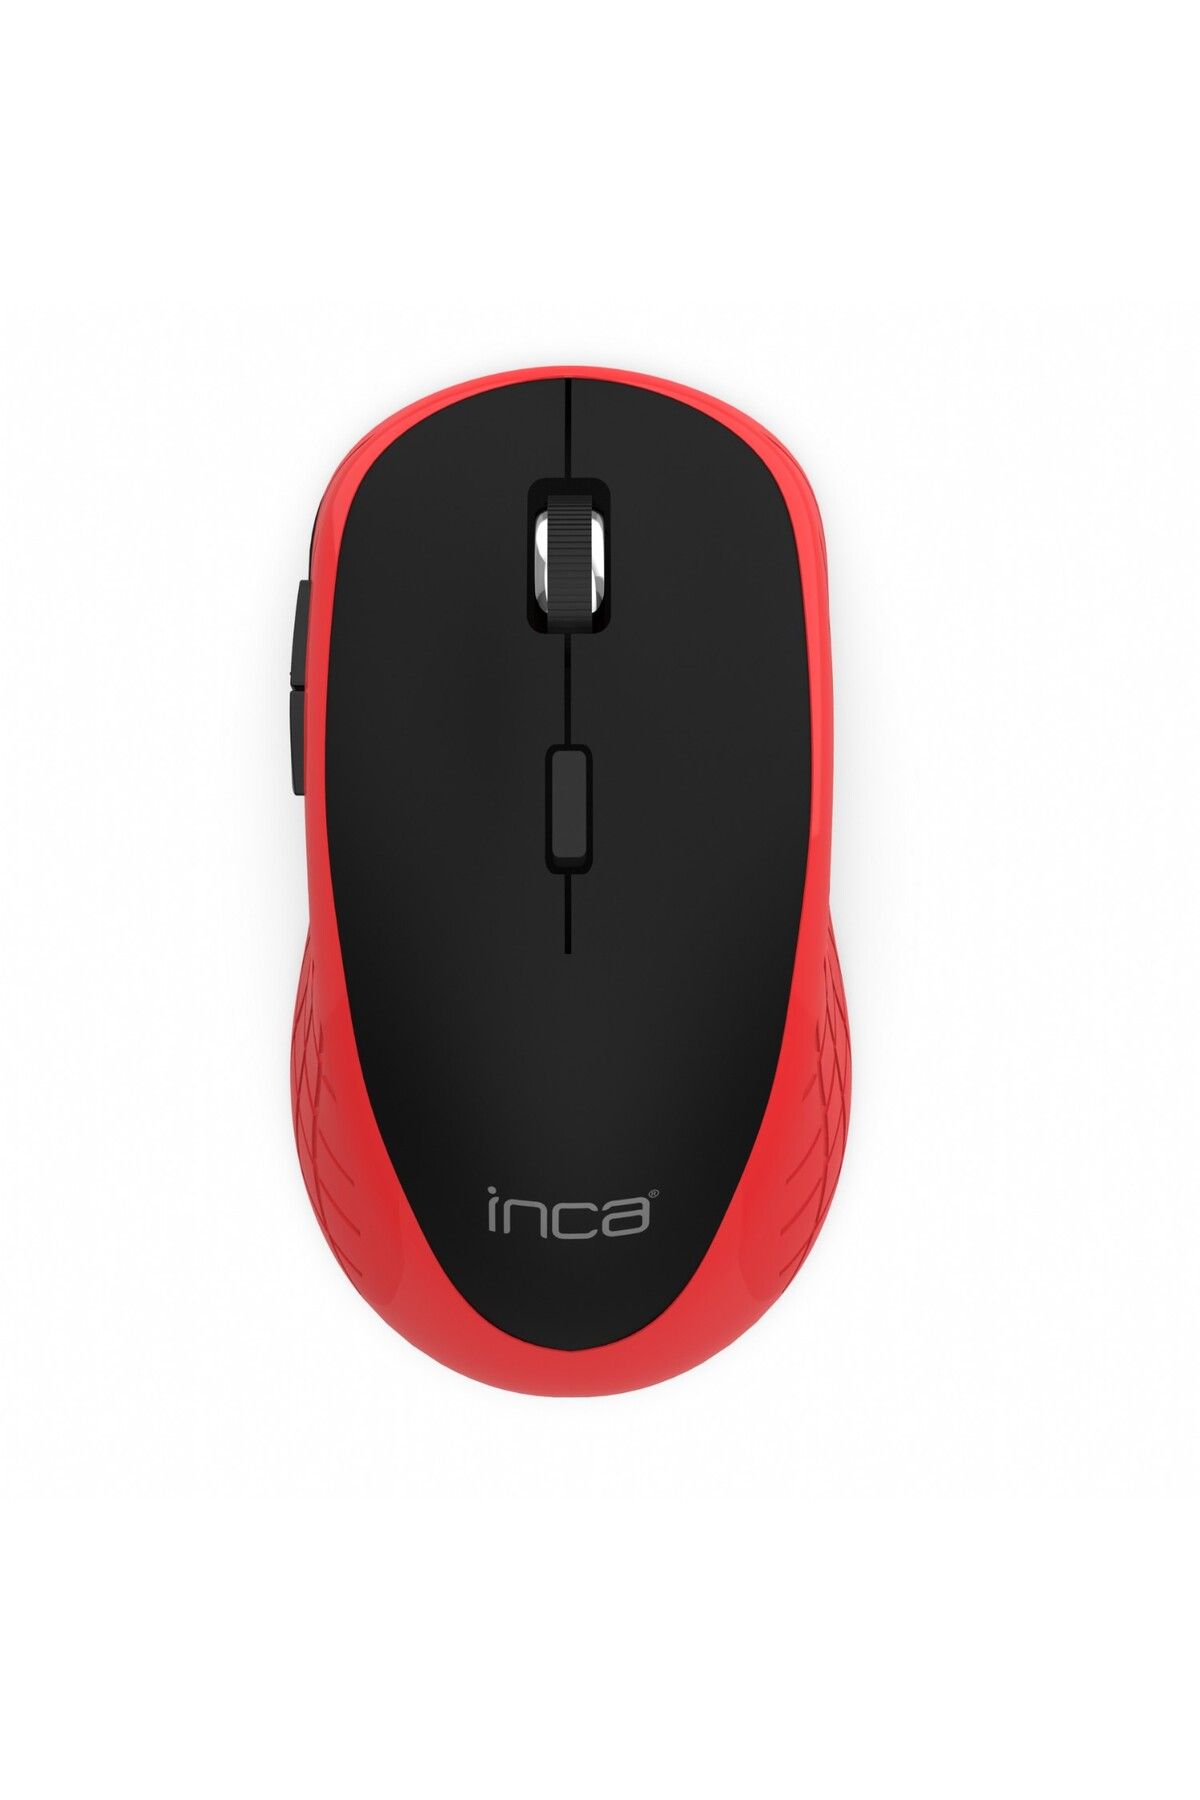 Inca Iwm-391t 1600dpi Rubber Wireless Mouse